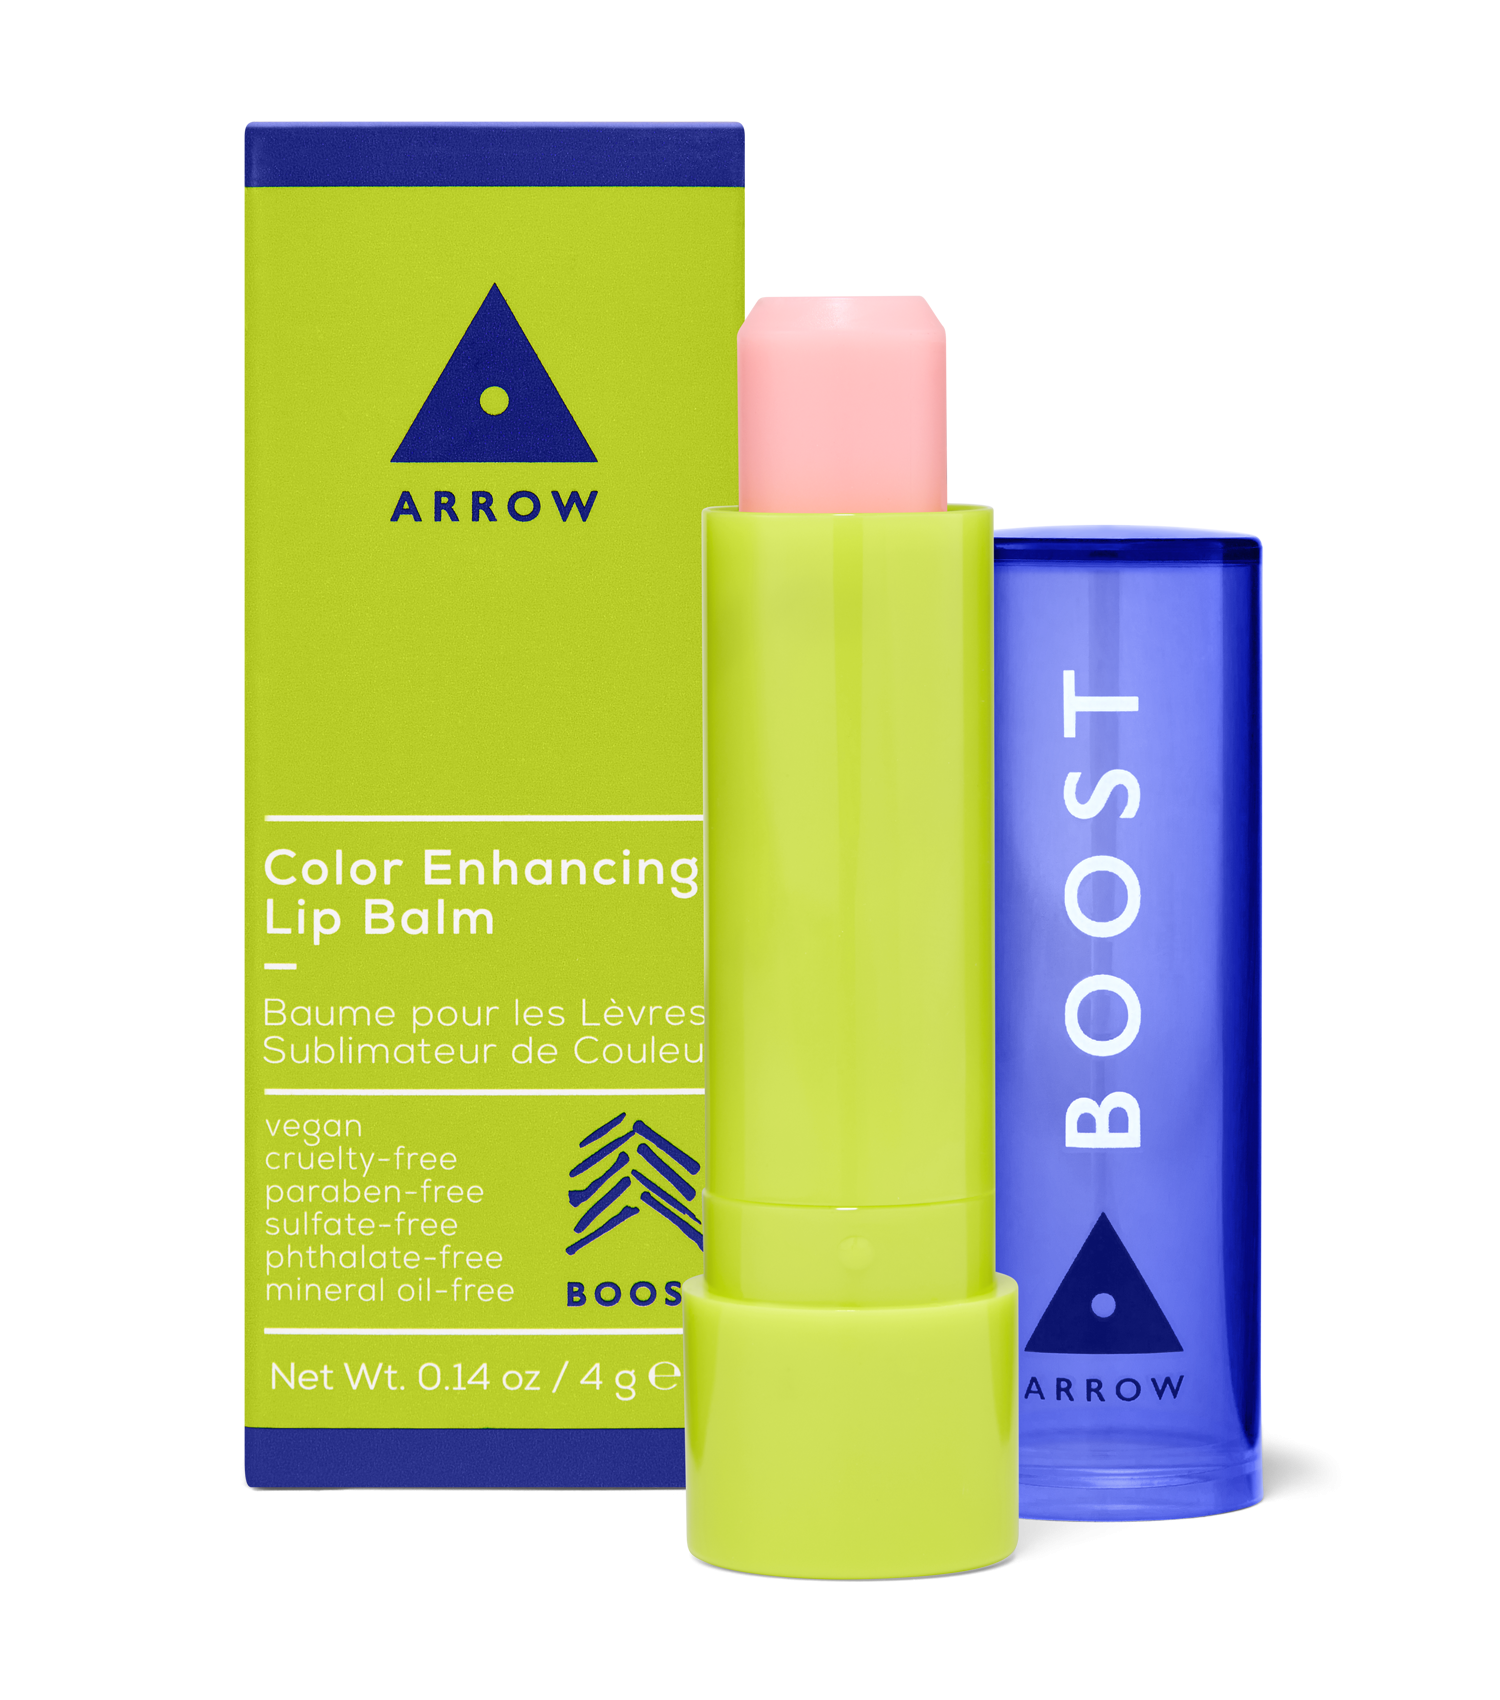 Color Enhancing Lip Balm